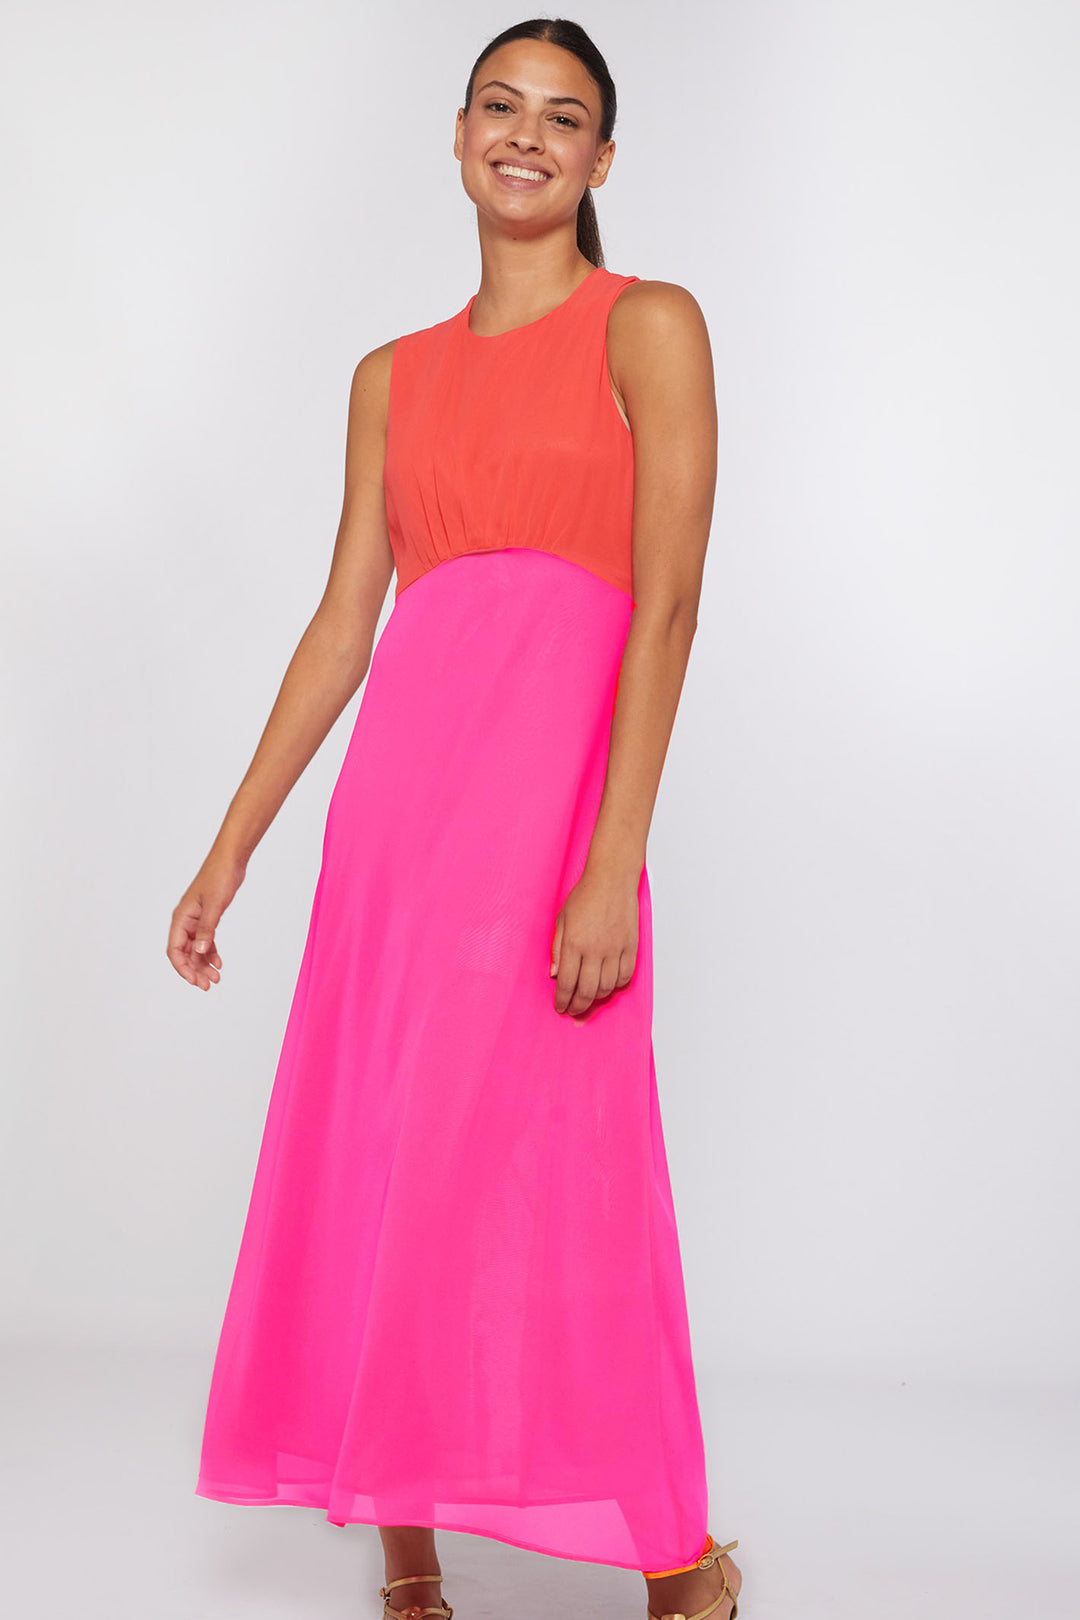 Vilagallo 31119 Grazia Pink Chiffon Sleeveless Dress - Dotique